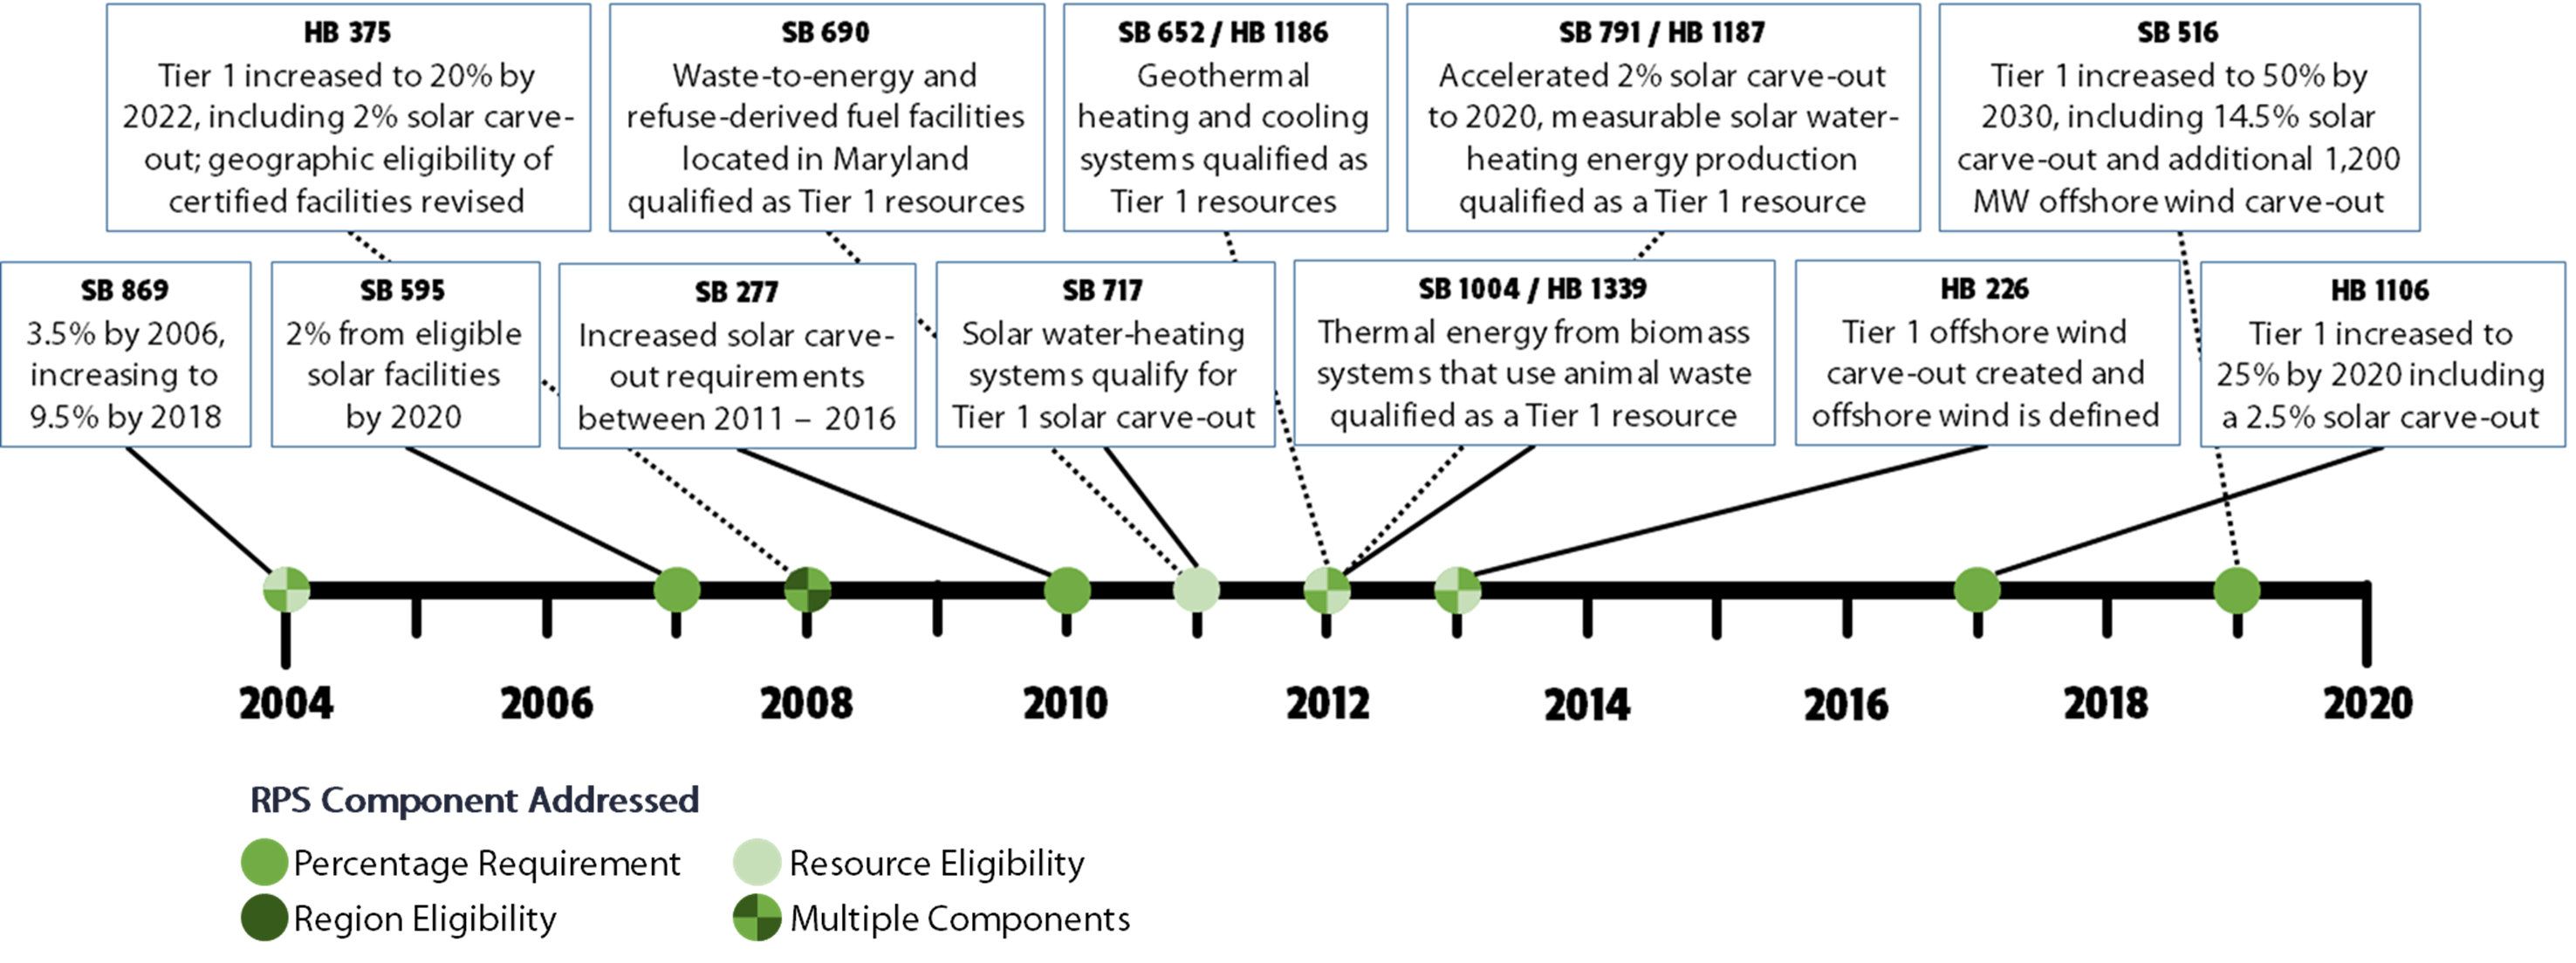 Timeline of Maryland’s Renewable Portfolio Standard (RPS)